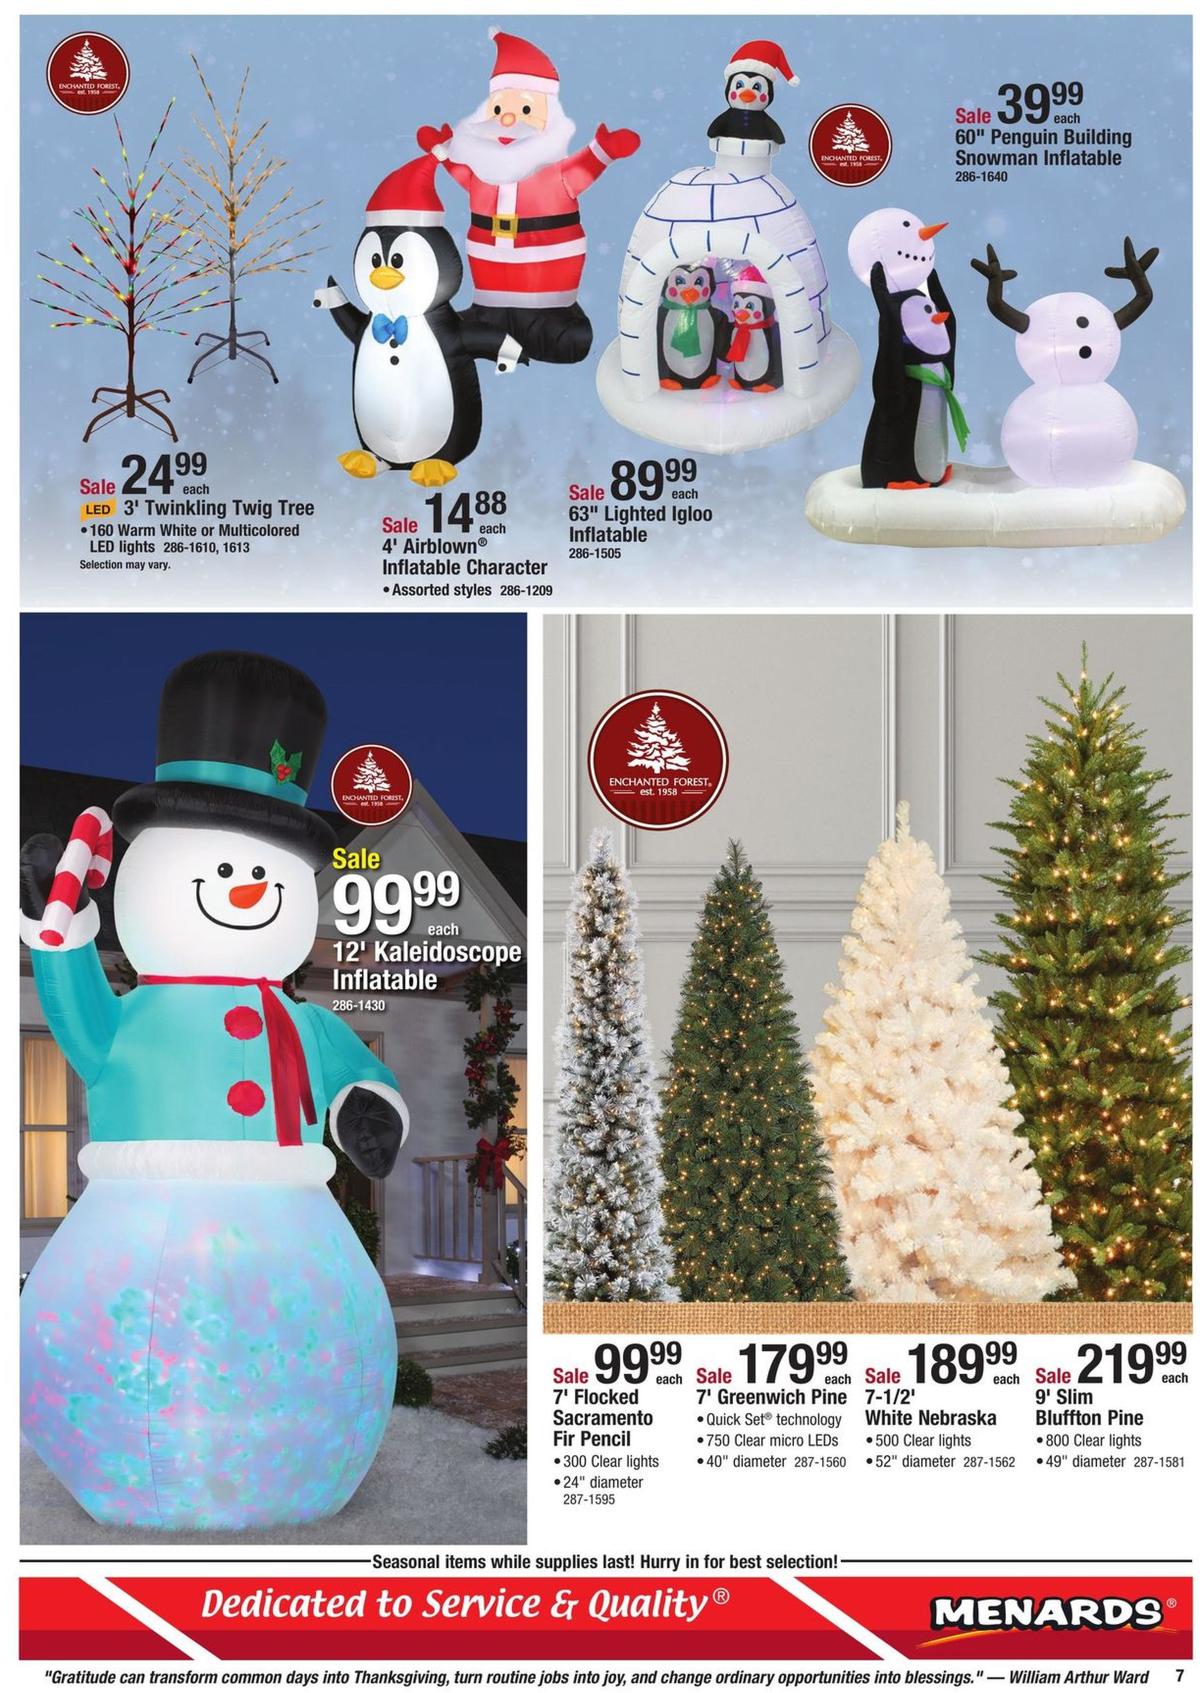 Menards Christmas Catalog Weekly Ad from November 24